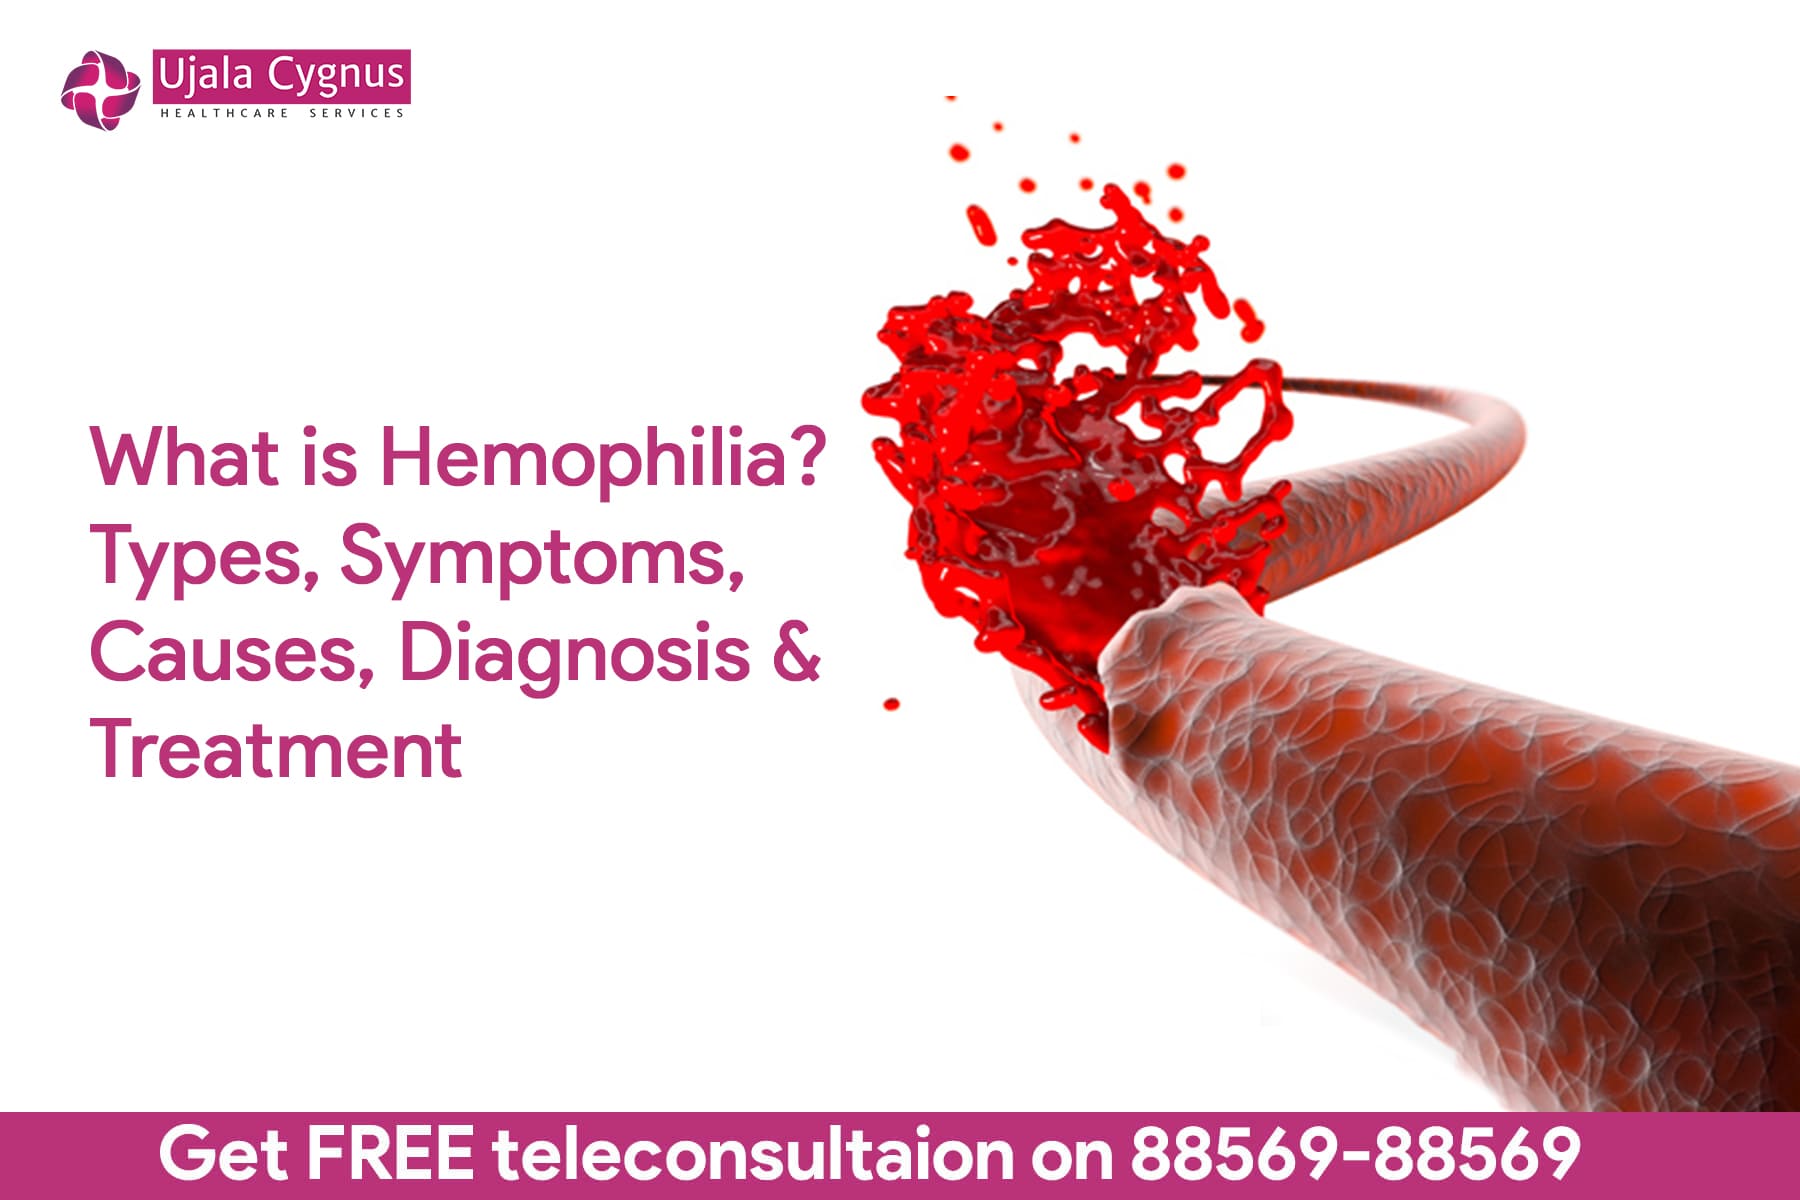 Hemophilia-Types, Symptoms, Causes, Diagnosis & Treatment